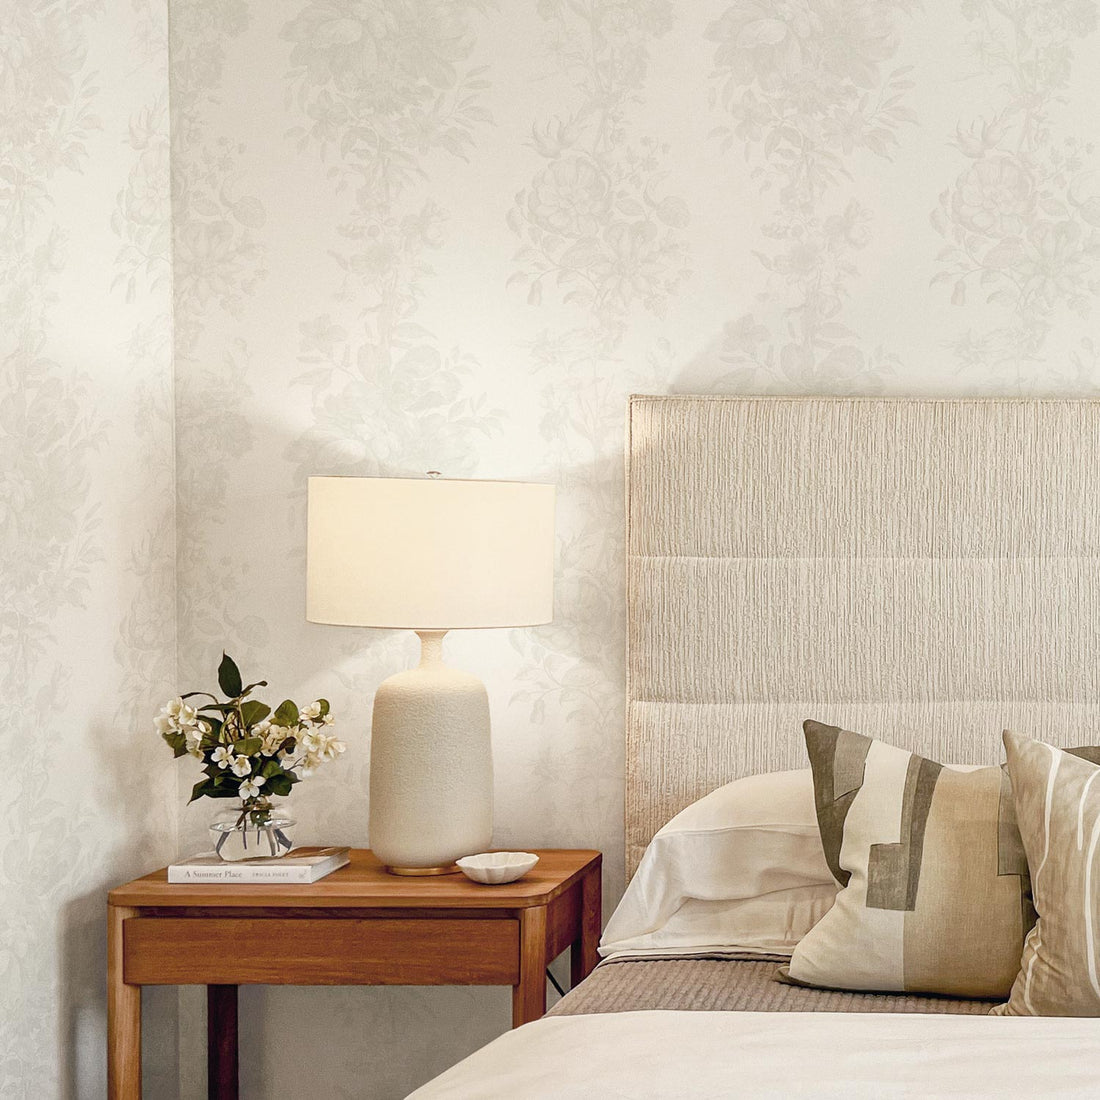 neutral floral design wallpaper for bedroom styling